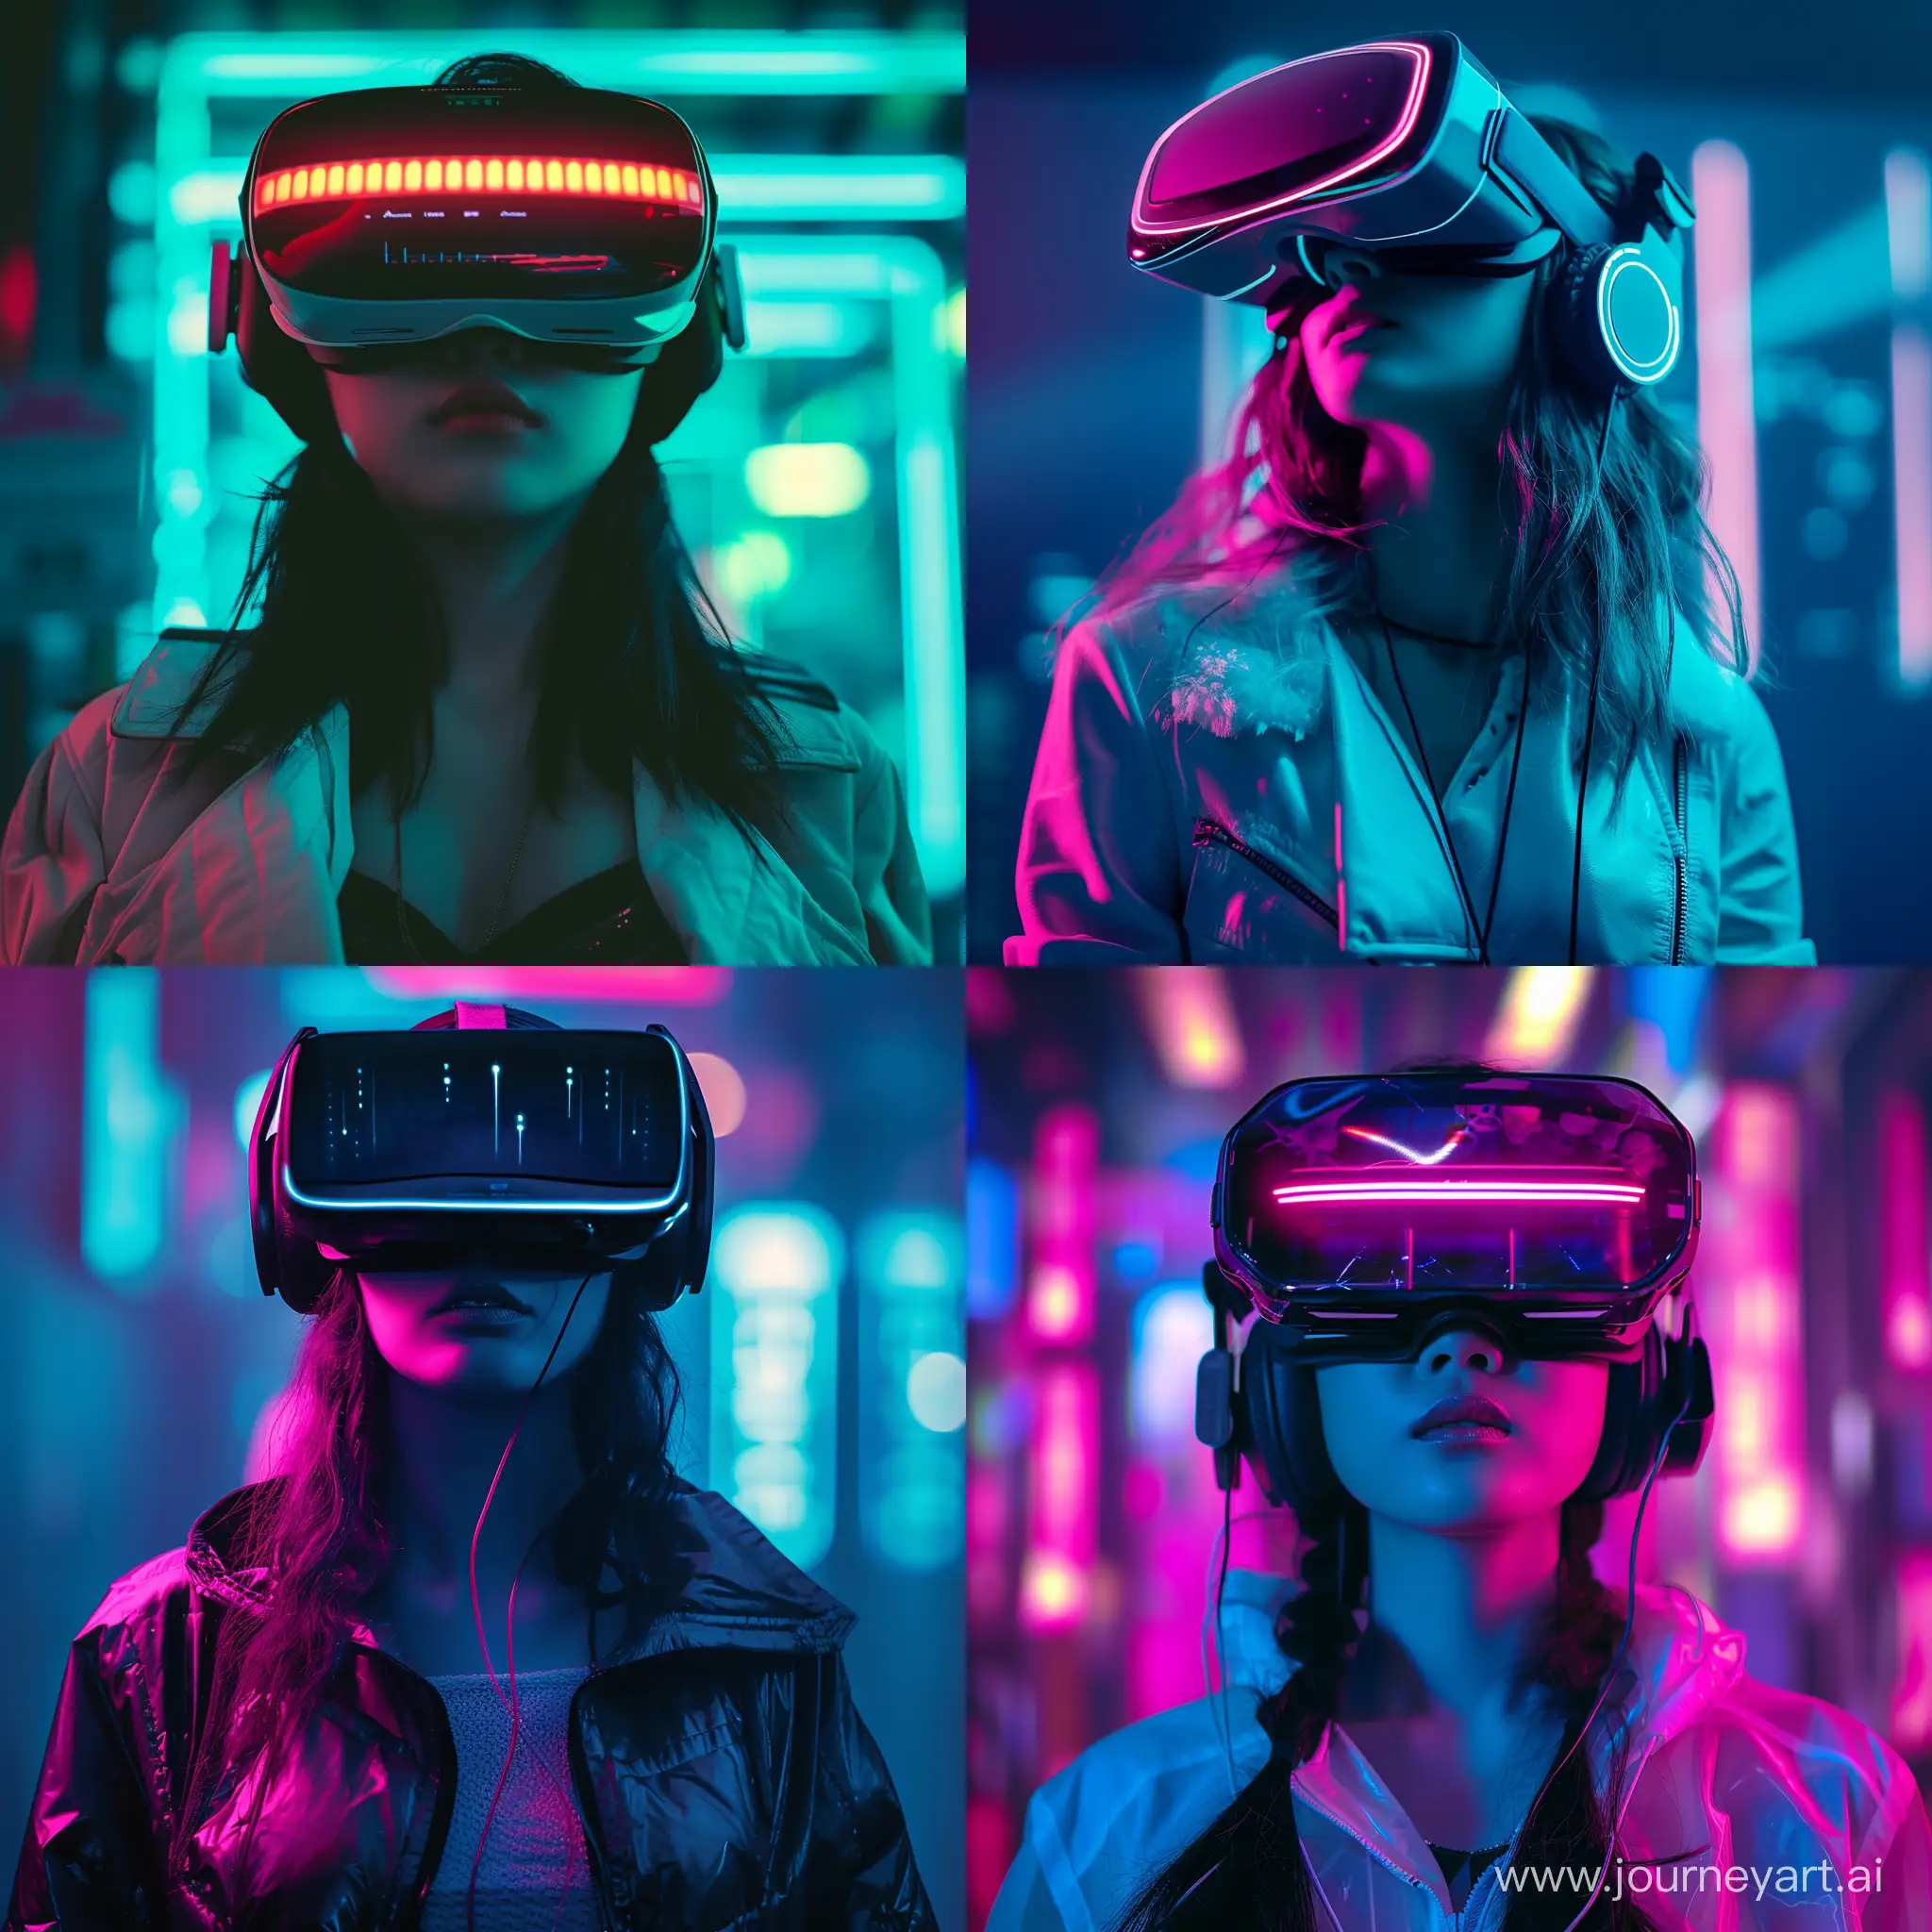 a futuristic photo of a girl wearing VR headsets, cyberpunk team 